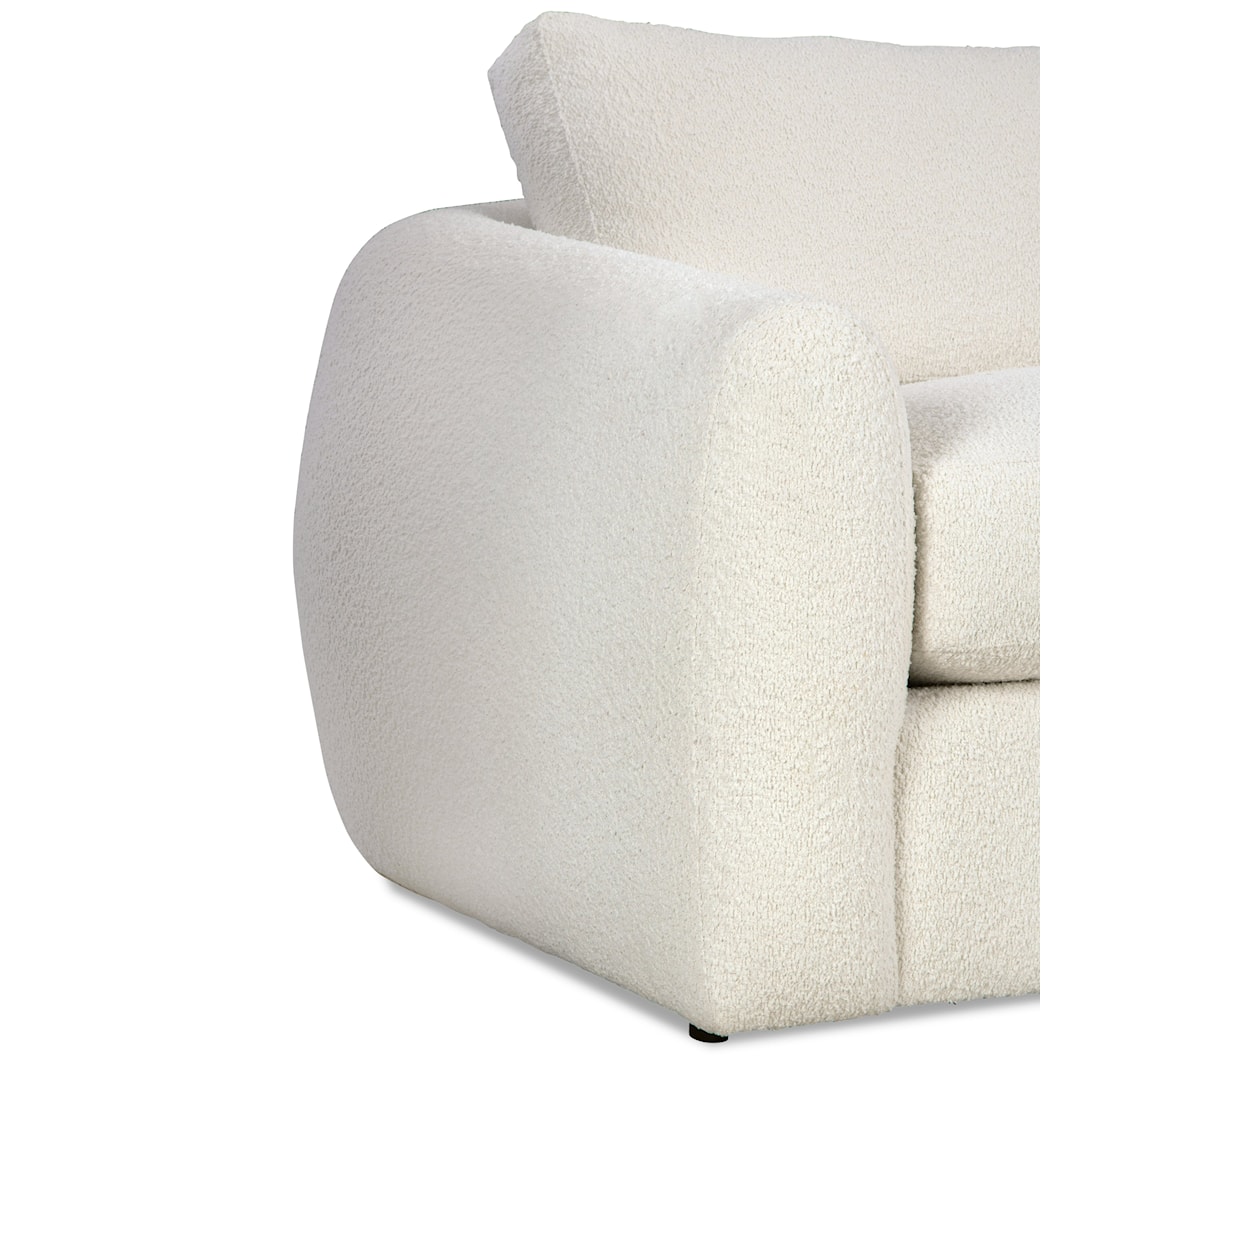 Craftmaster 731850BD 2-Cushion Sofa